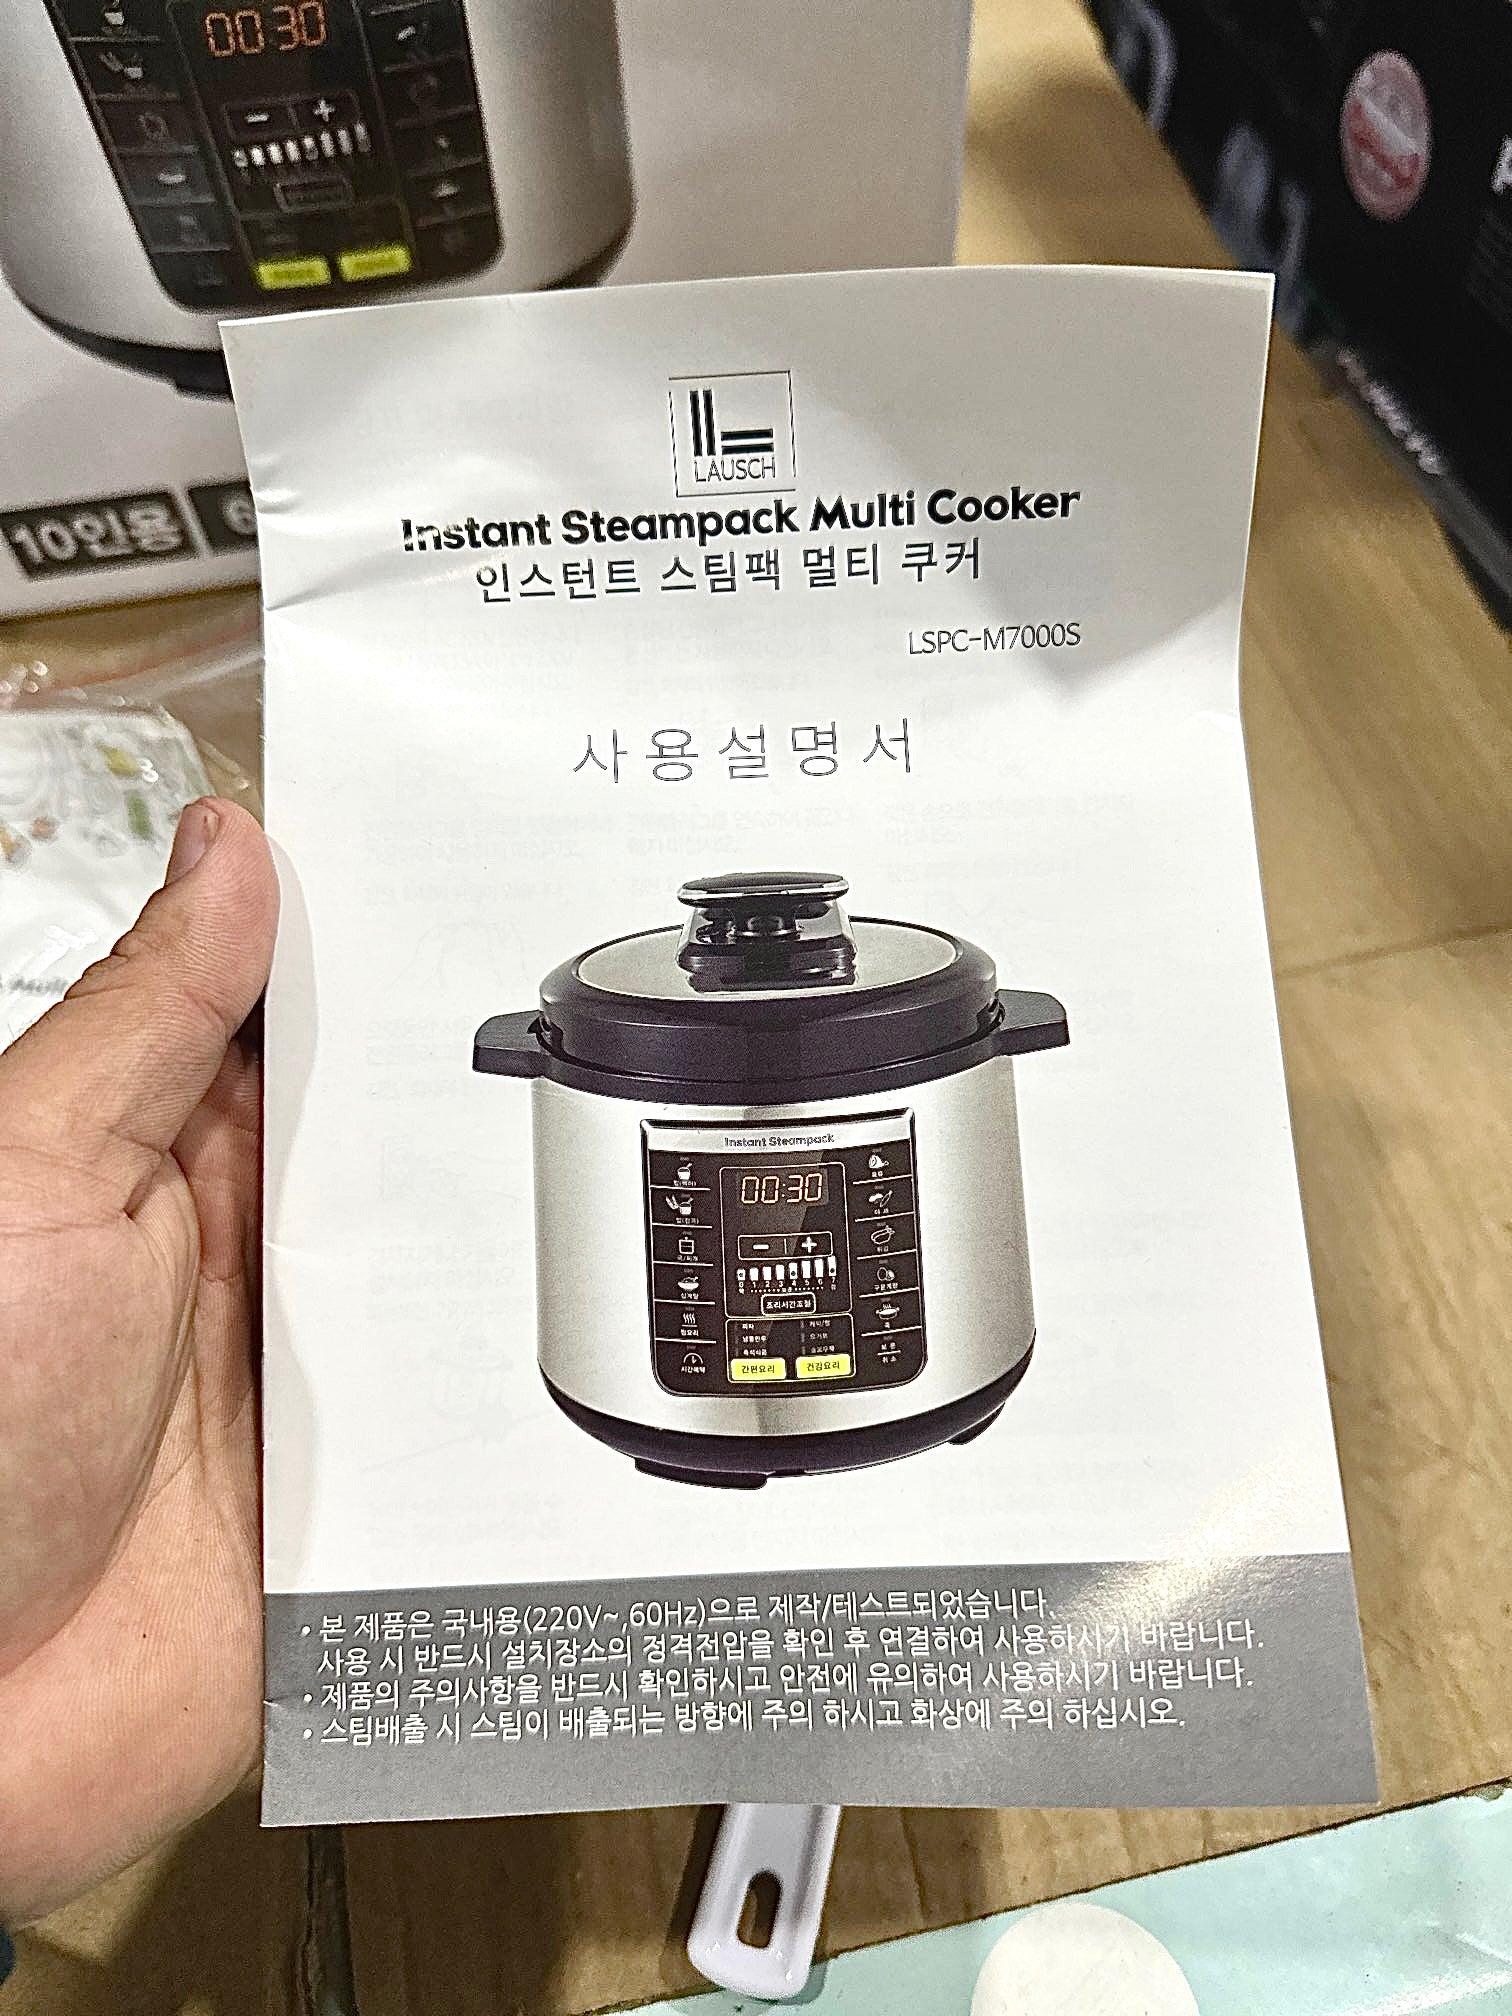 Lot imported LAUSH Korea Electric Multi Cooker 6L